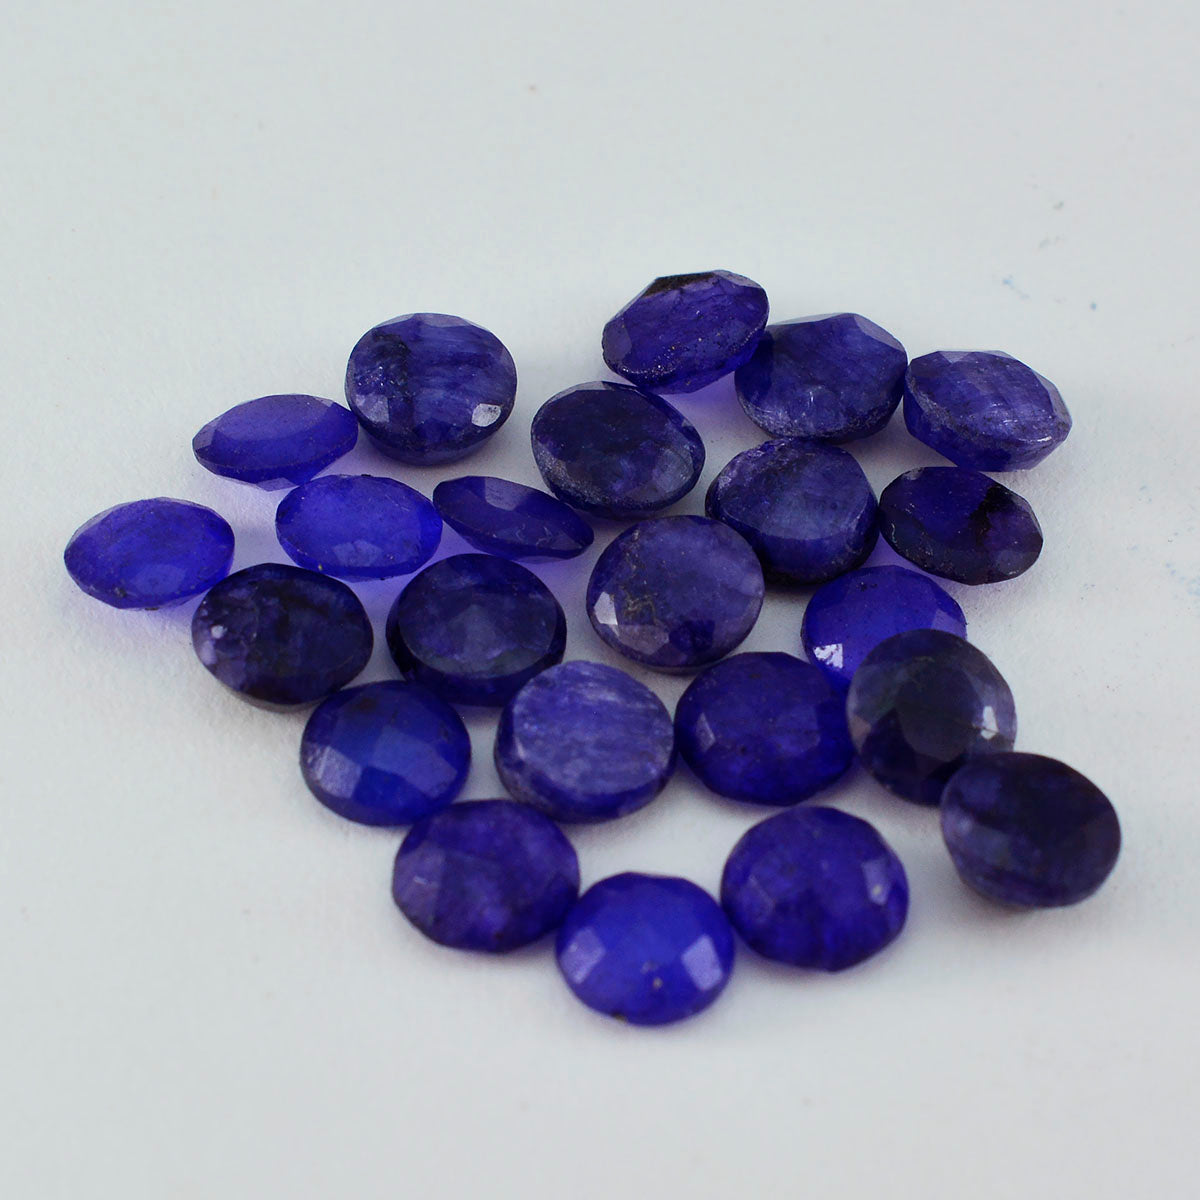 riyogems 1 шт. натуральная синяя яшма граненая 5x5 мм круглая форма красивый качественный камень